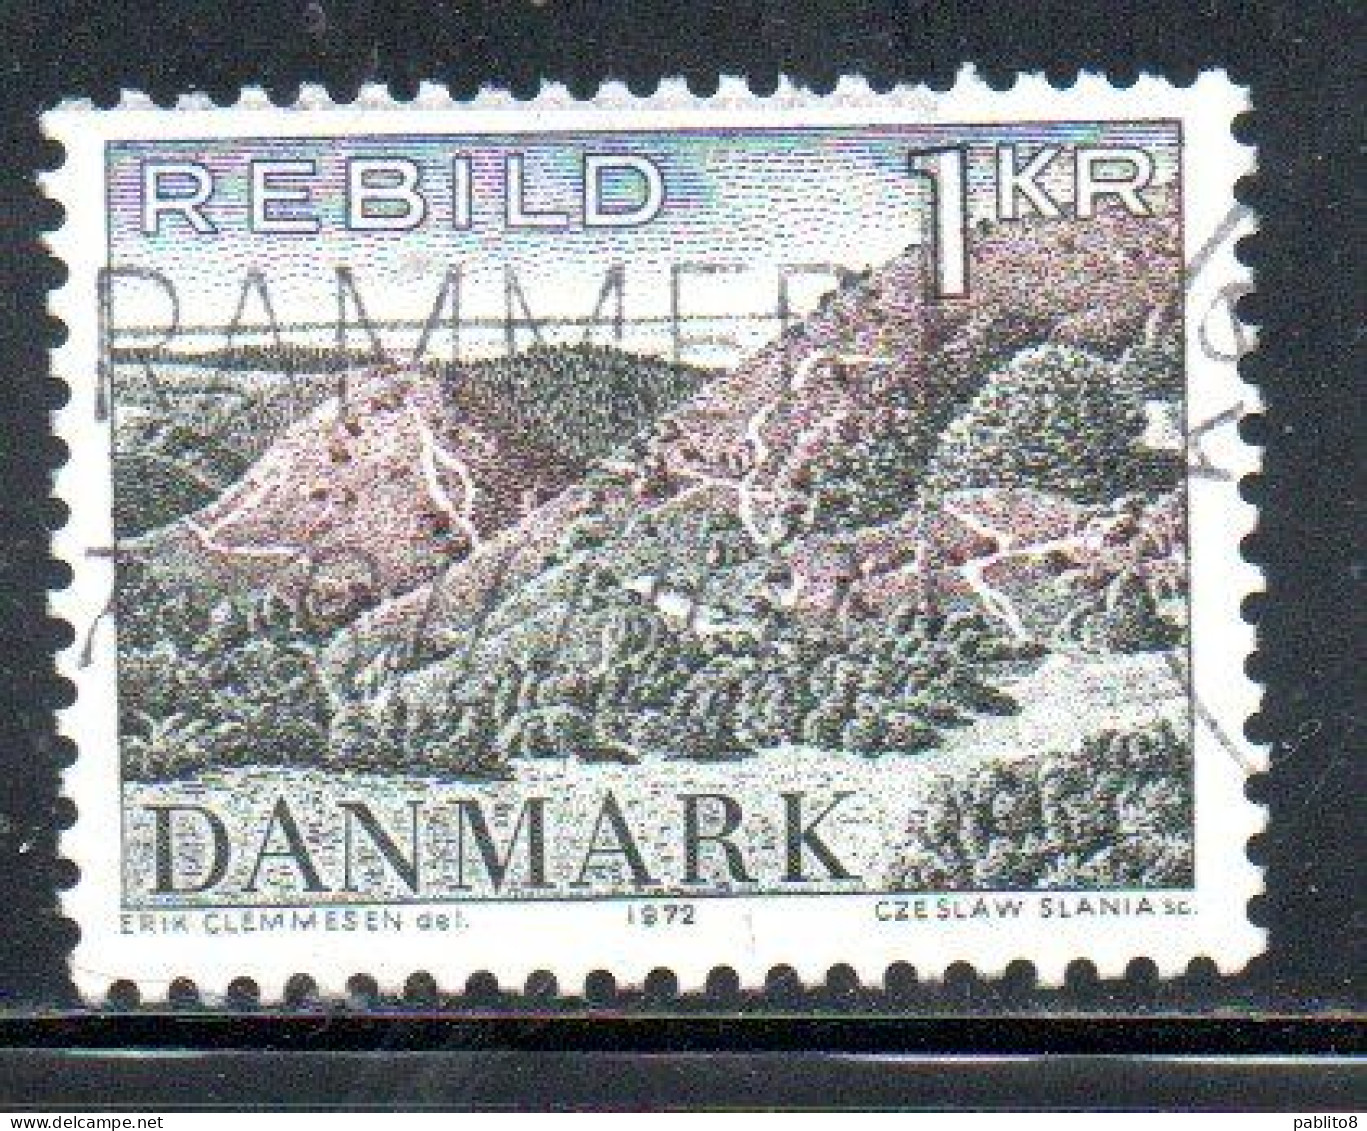 DANEMARK DANMARK DENMARK DANIMARCA 1972 REBILD HILLS 1k USED USATO OBLITERE' - Gebraucht